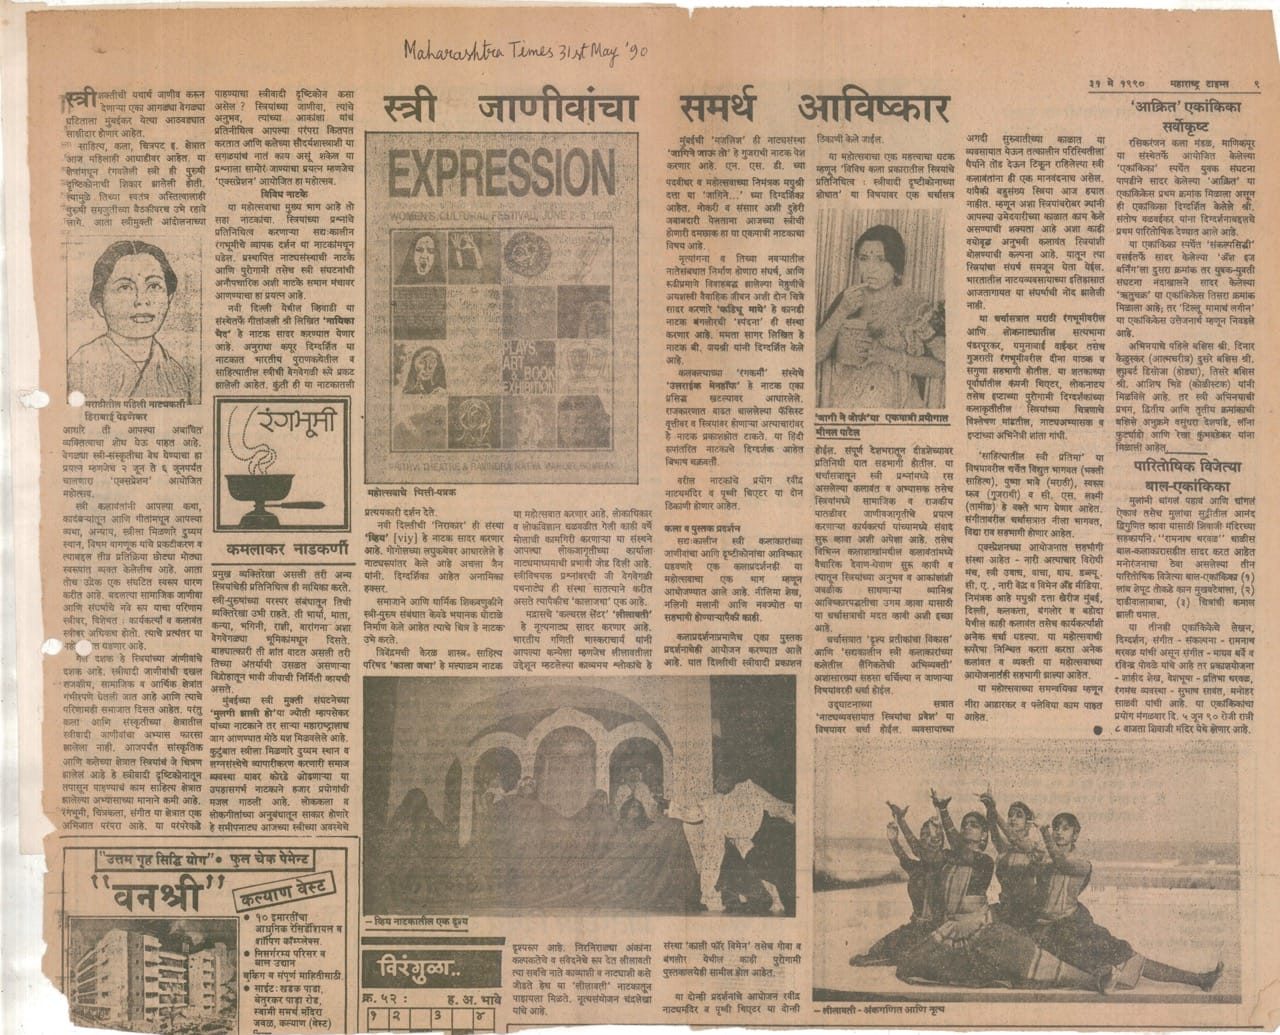 reports/Expression_Maharashtra Times.jpg